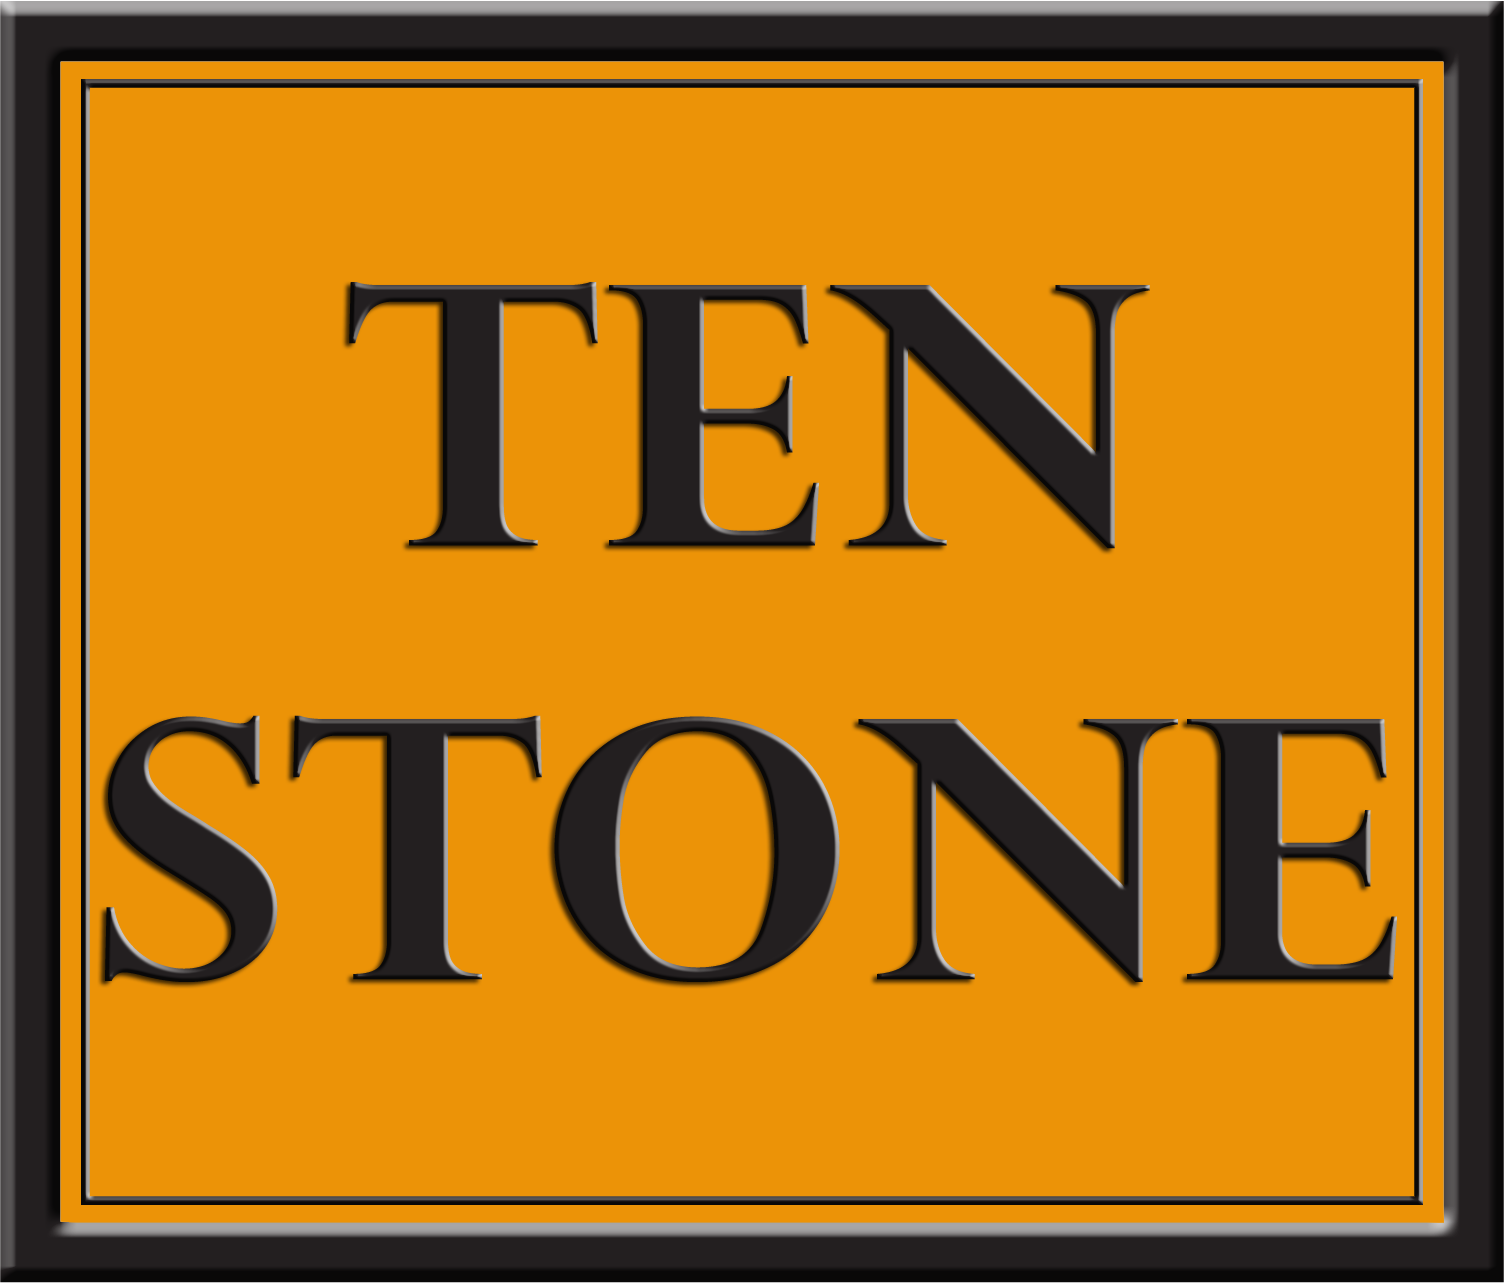 TenStone